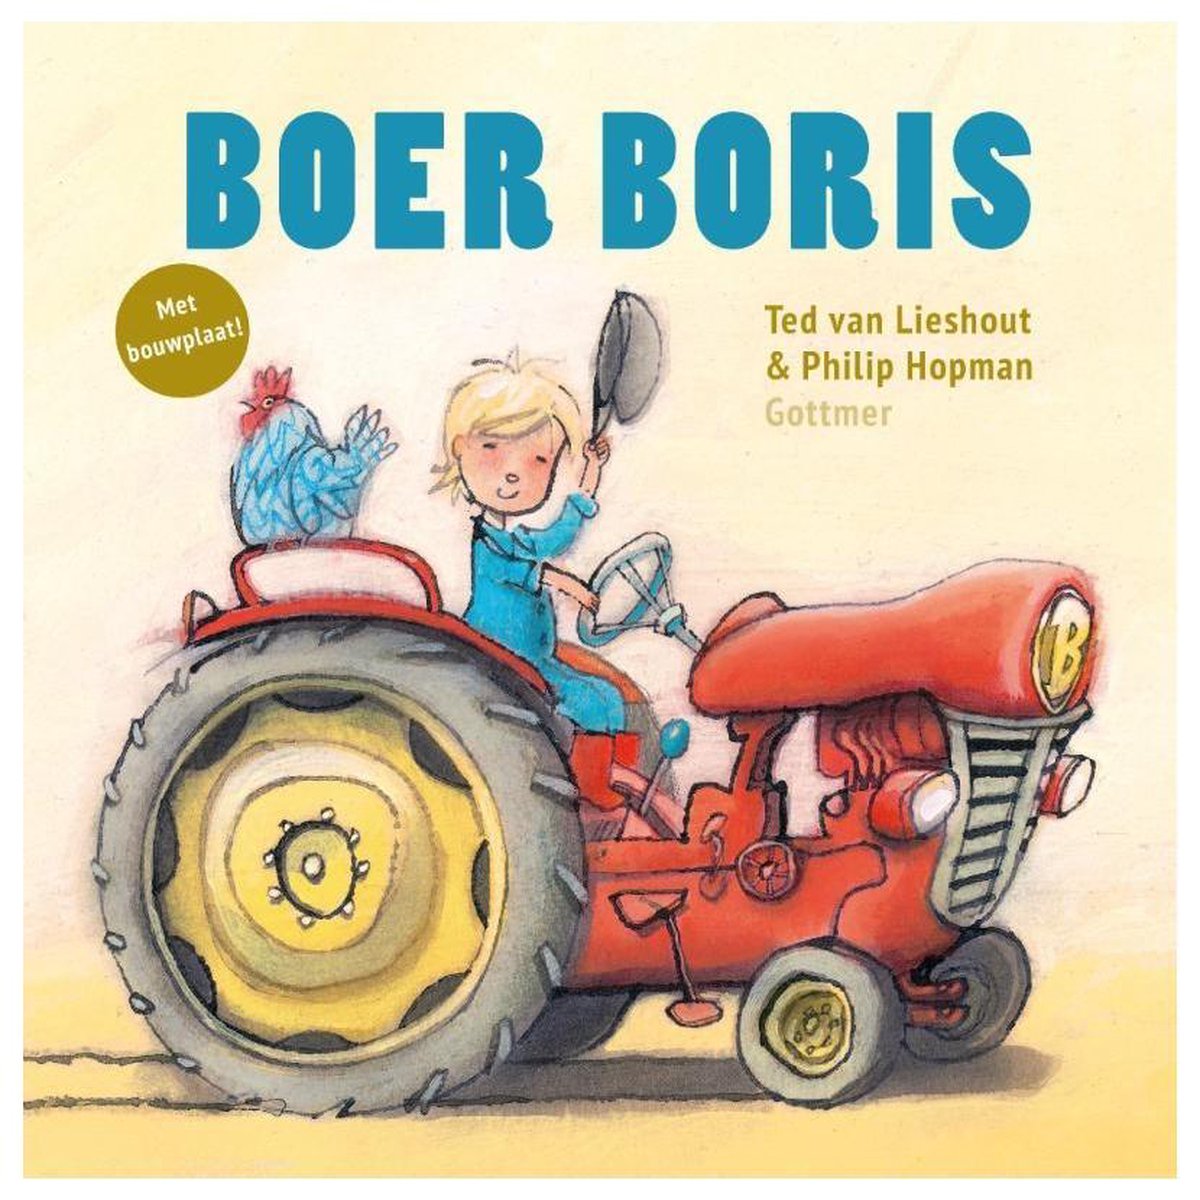 Boer Boris  -   Boer Boris (met bouwplaat) - Ted van Lieshout